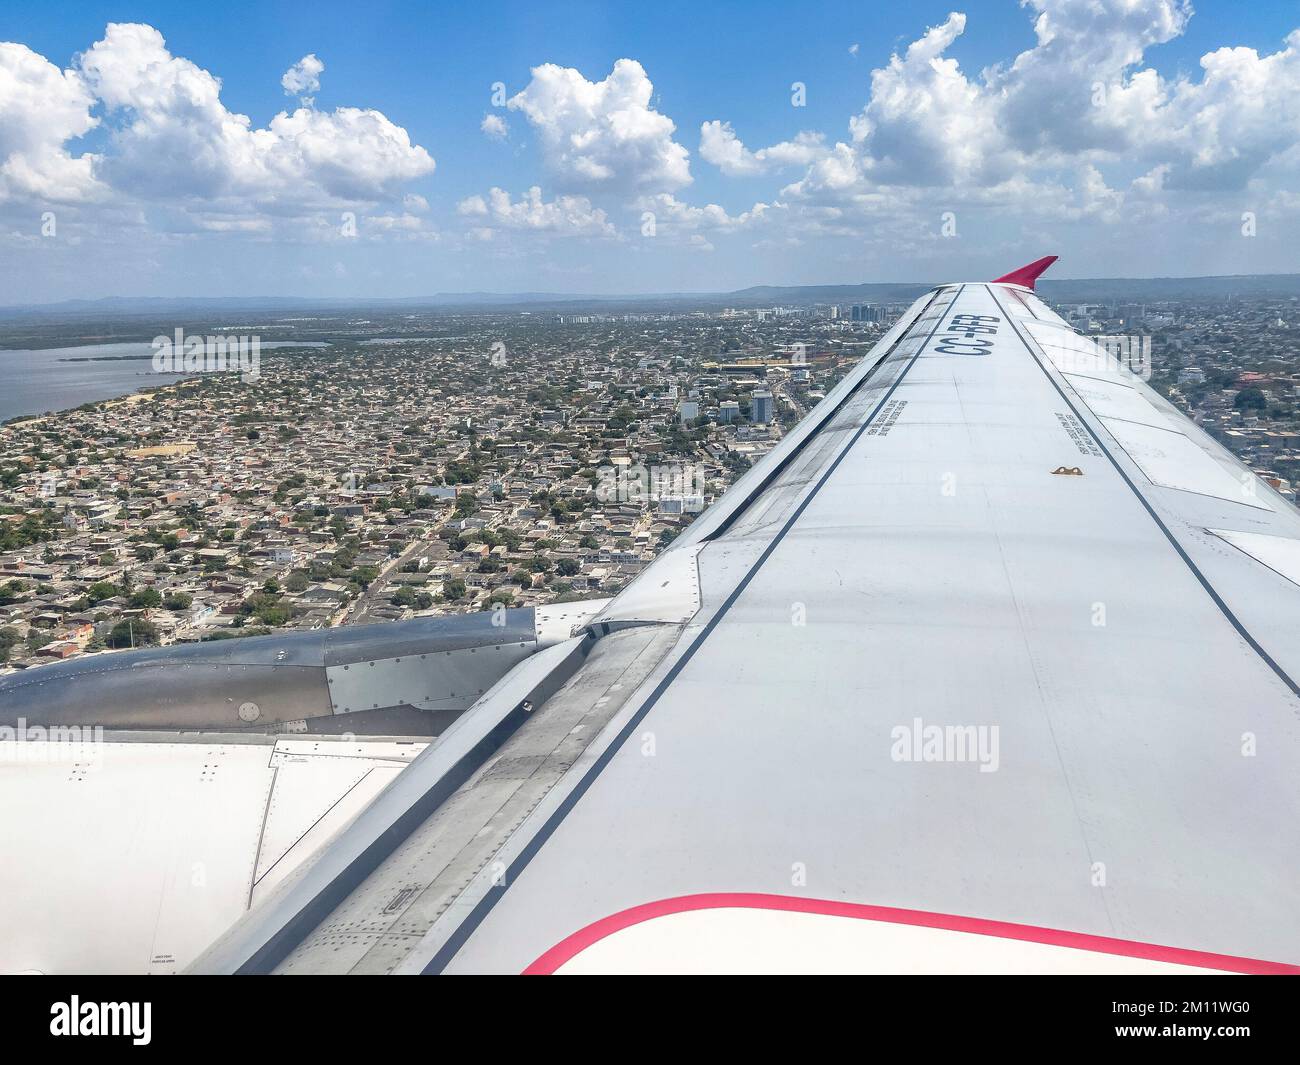 South America, Colombia, Departamento de Bolívar, Cartagena de Indias, view of Cartagena from airplane window Stock Photo